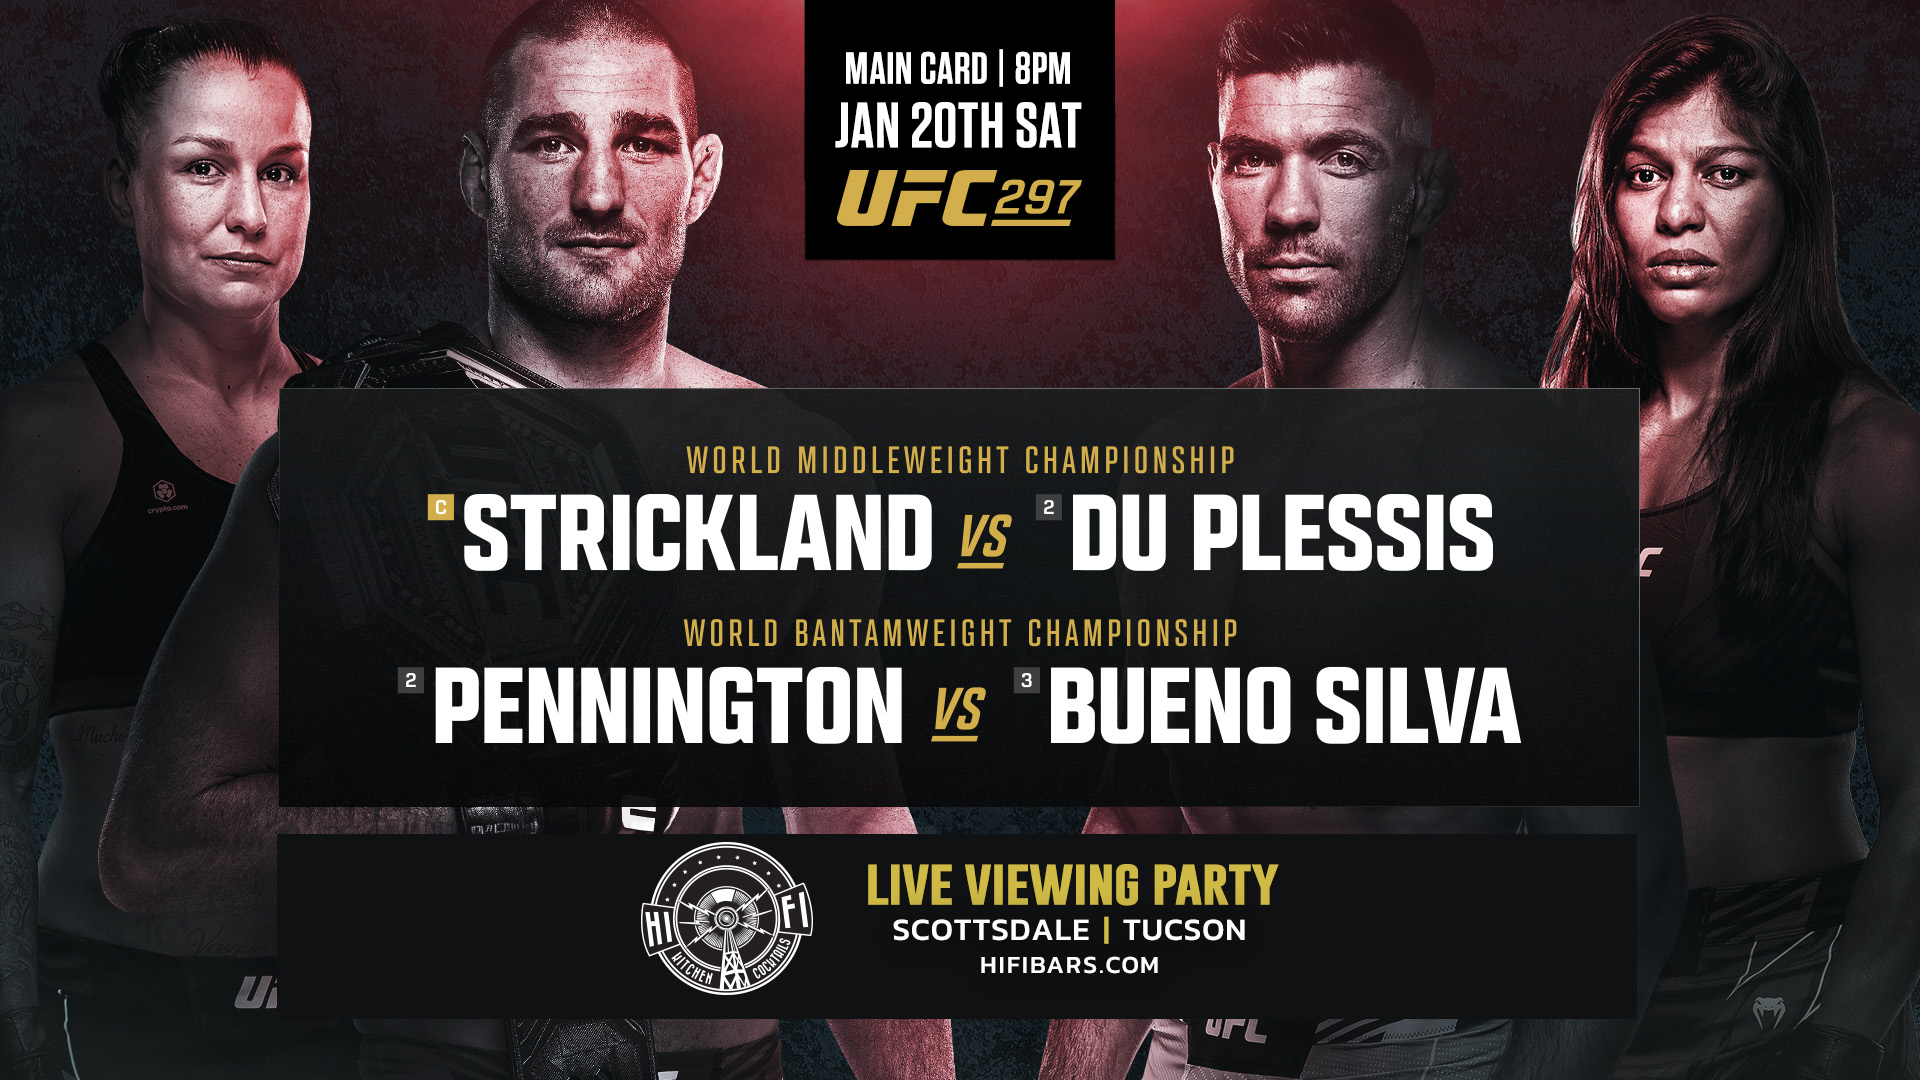 UFC 297 | Strickland vs Du PLessis & Pennington vs Bueno Silva. HI FI Live Viewing Party.